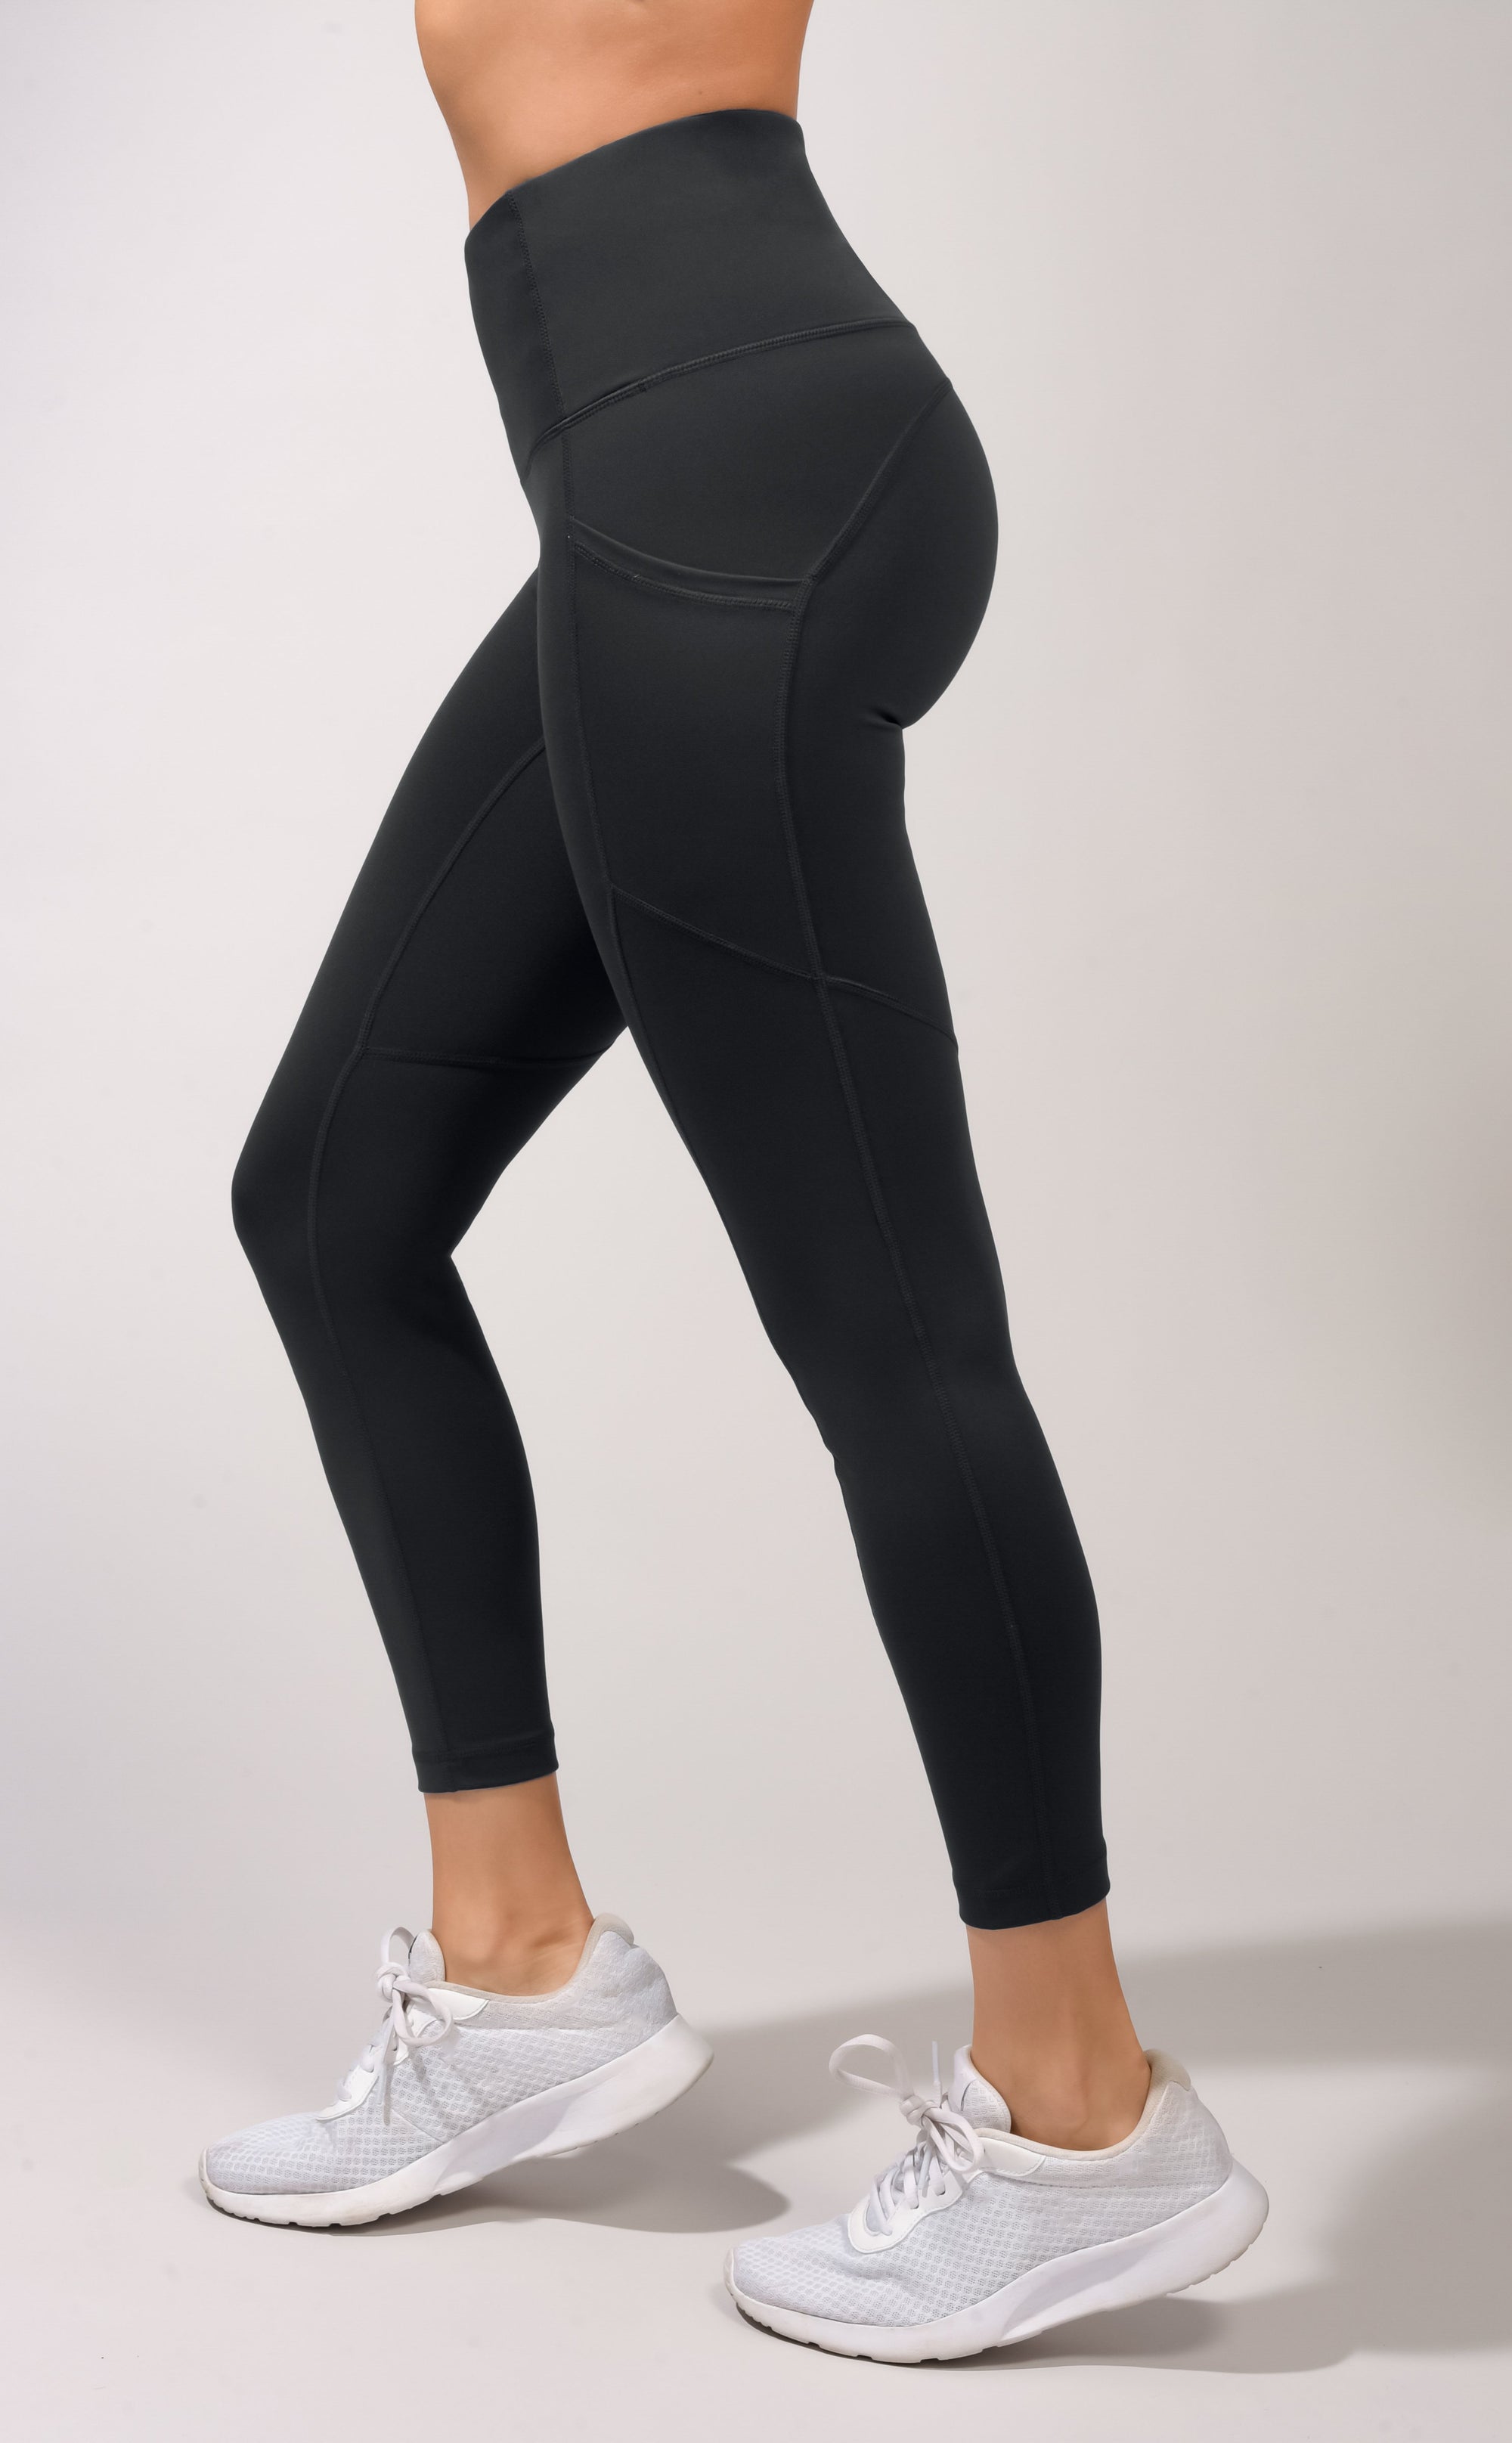 Yogalicious Lux Leggings Yoga Pants Women's Medium Gym Workout